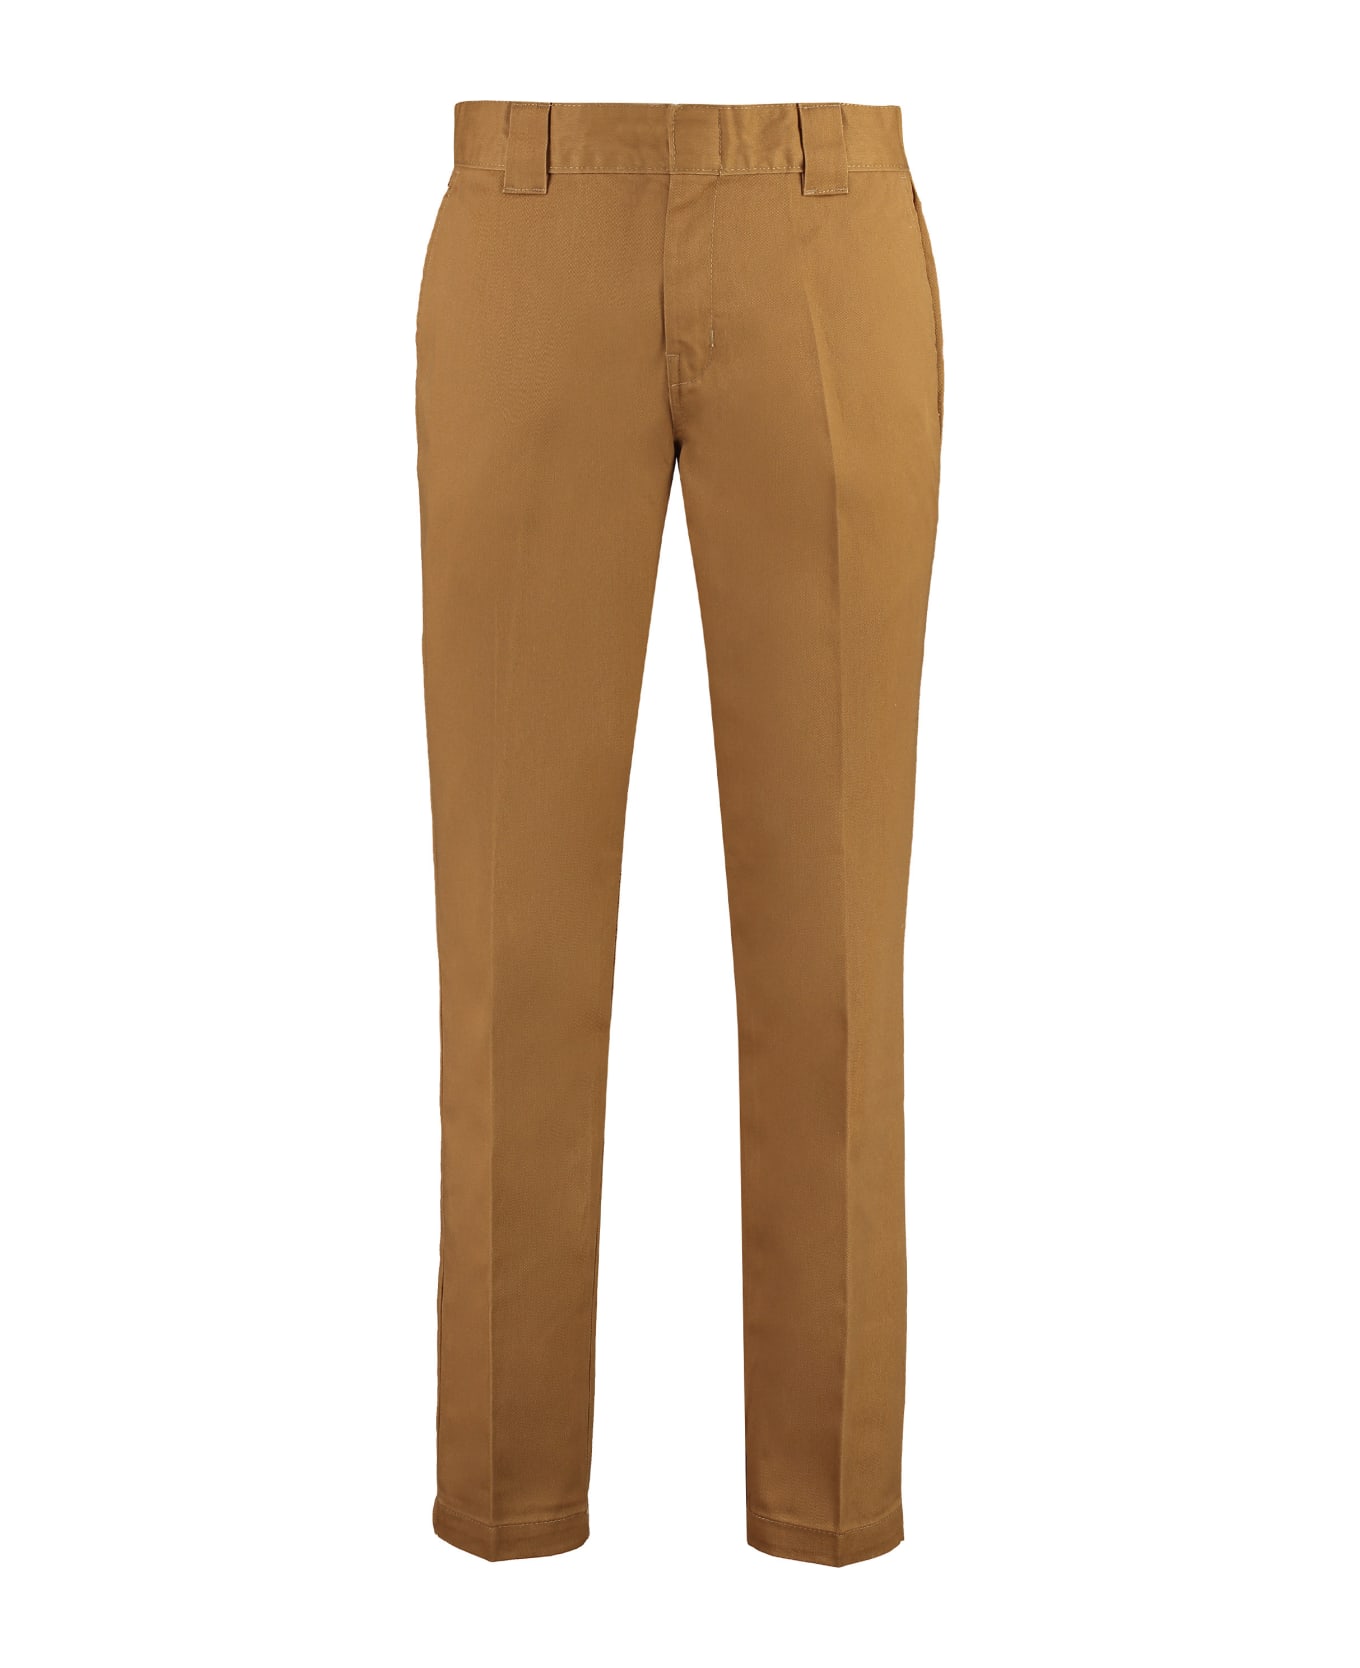 Dickies 872 Slim Fit Trousers - brown ボトムス